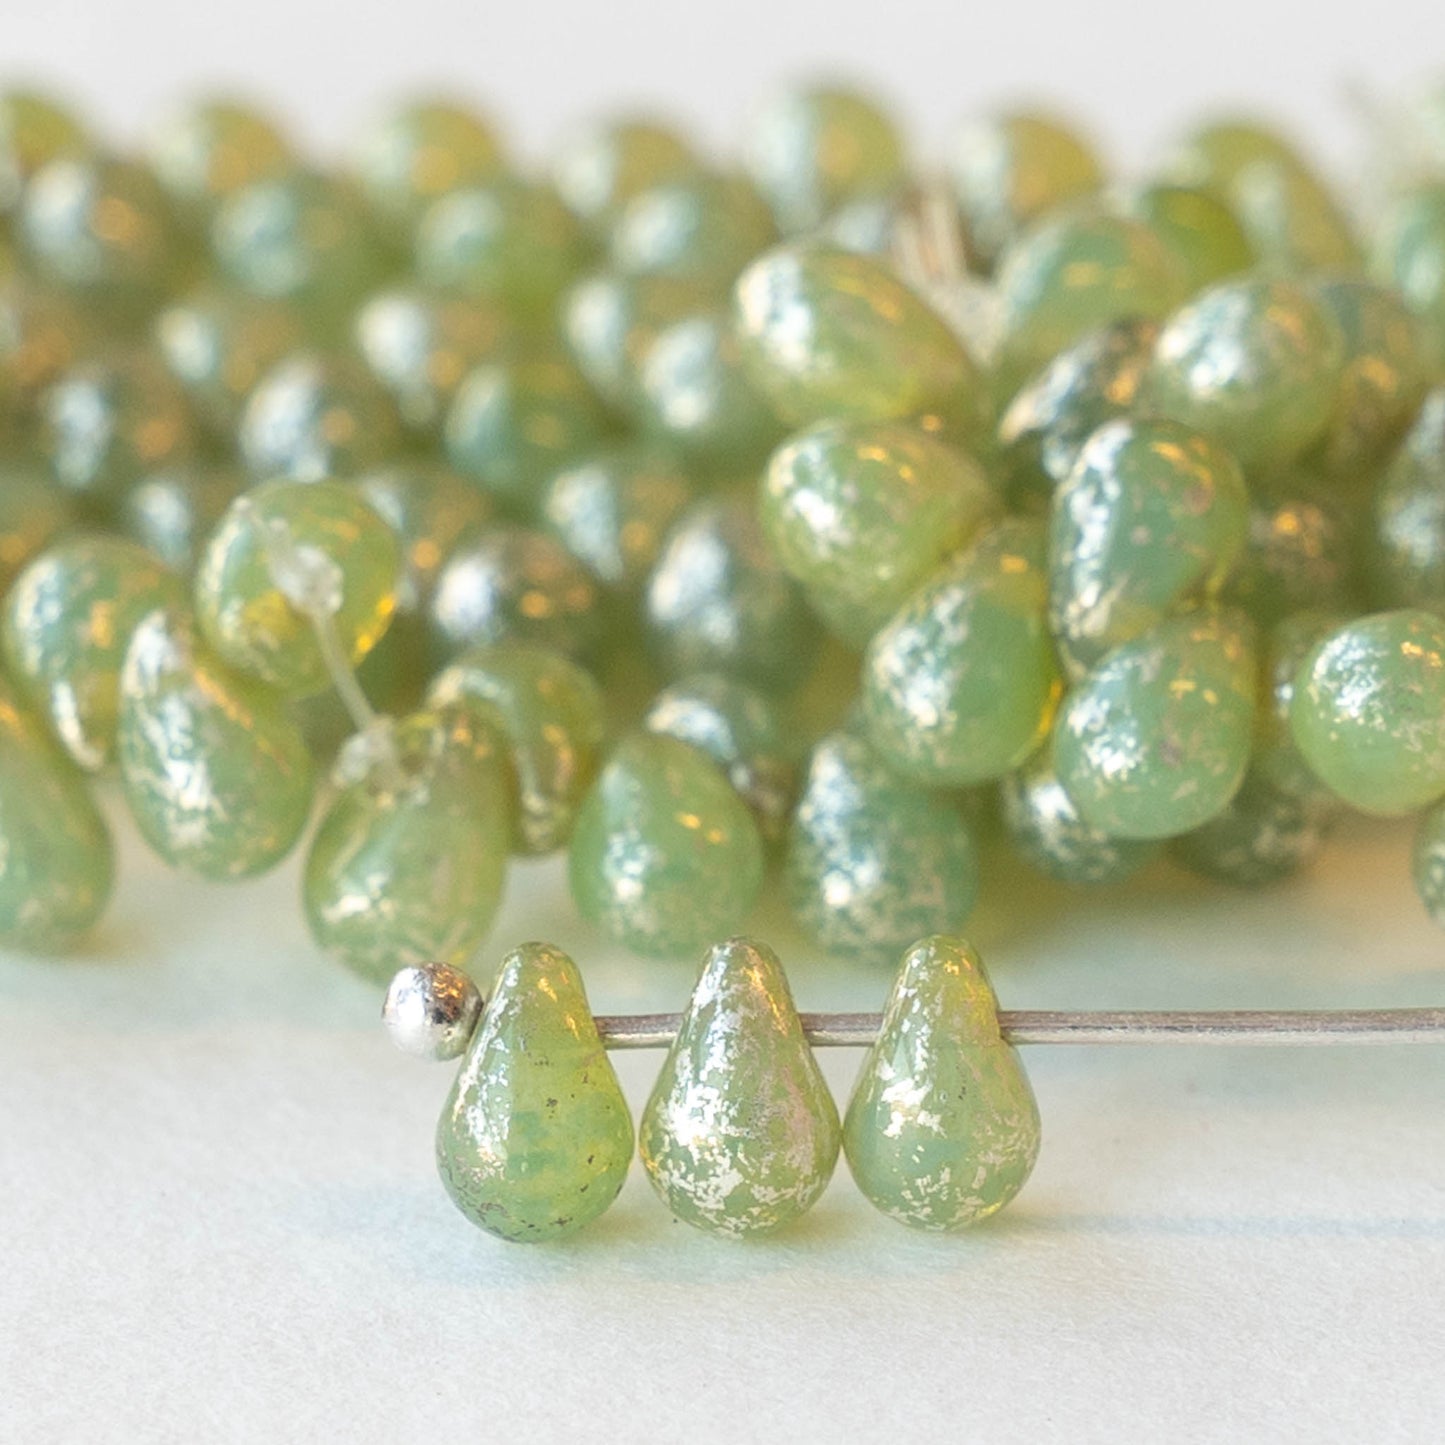 4x6mm Glass Teardrop Beads - Seafoam With Silver Dust - 50 Beads